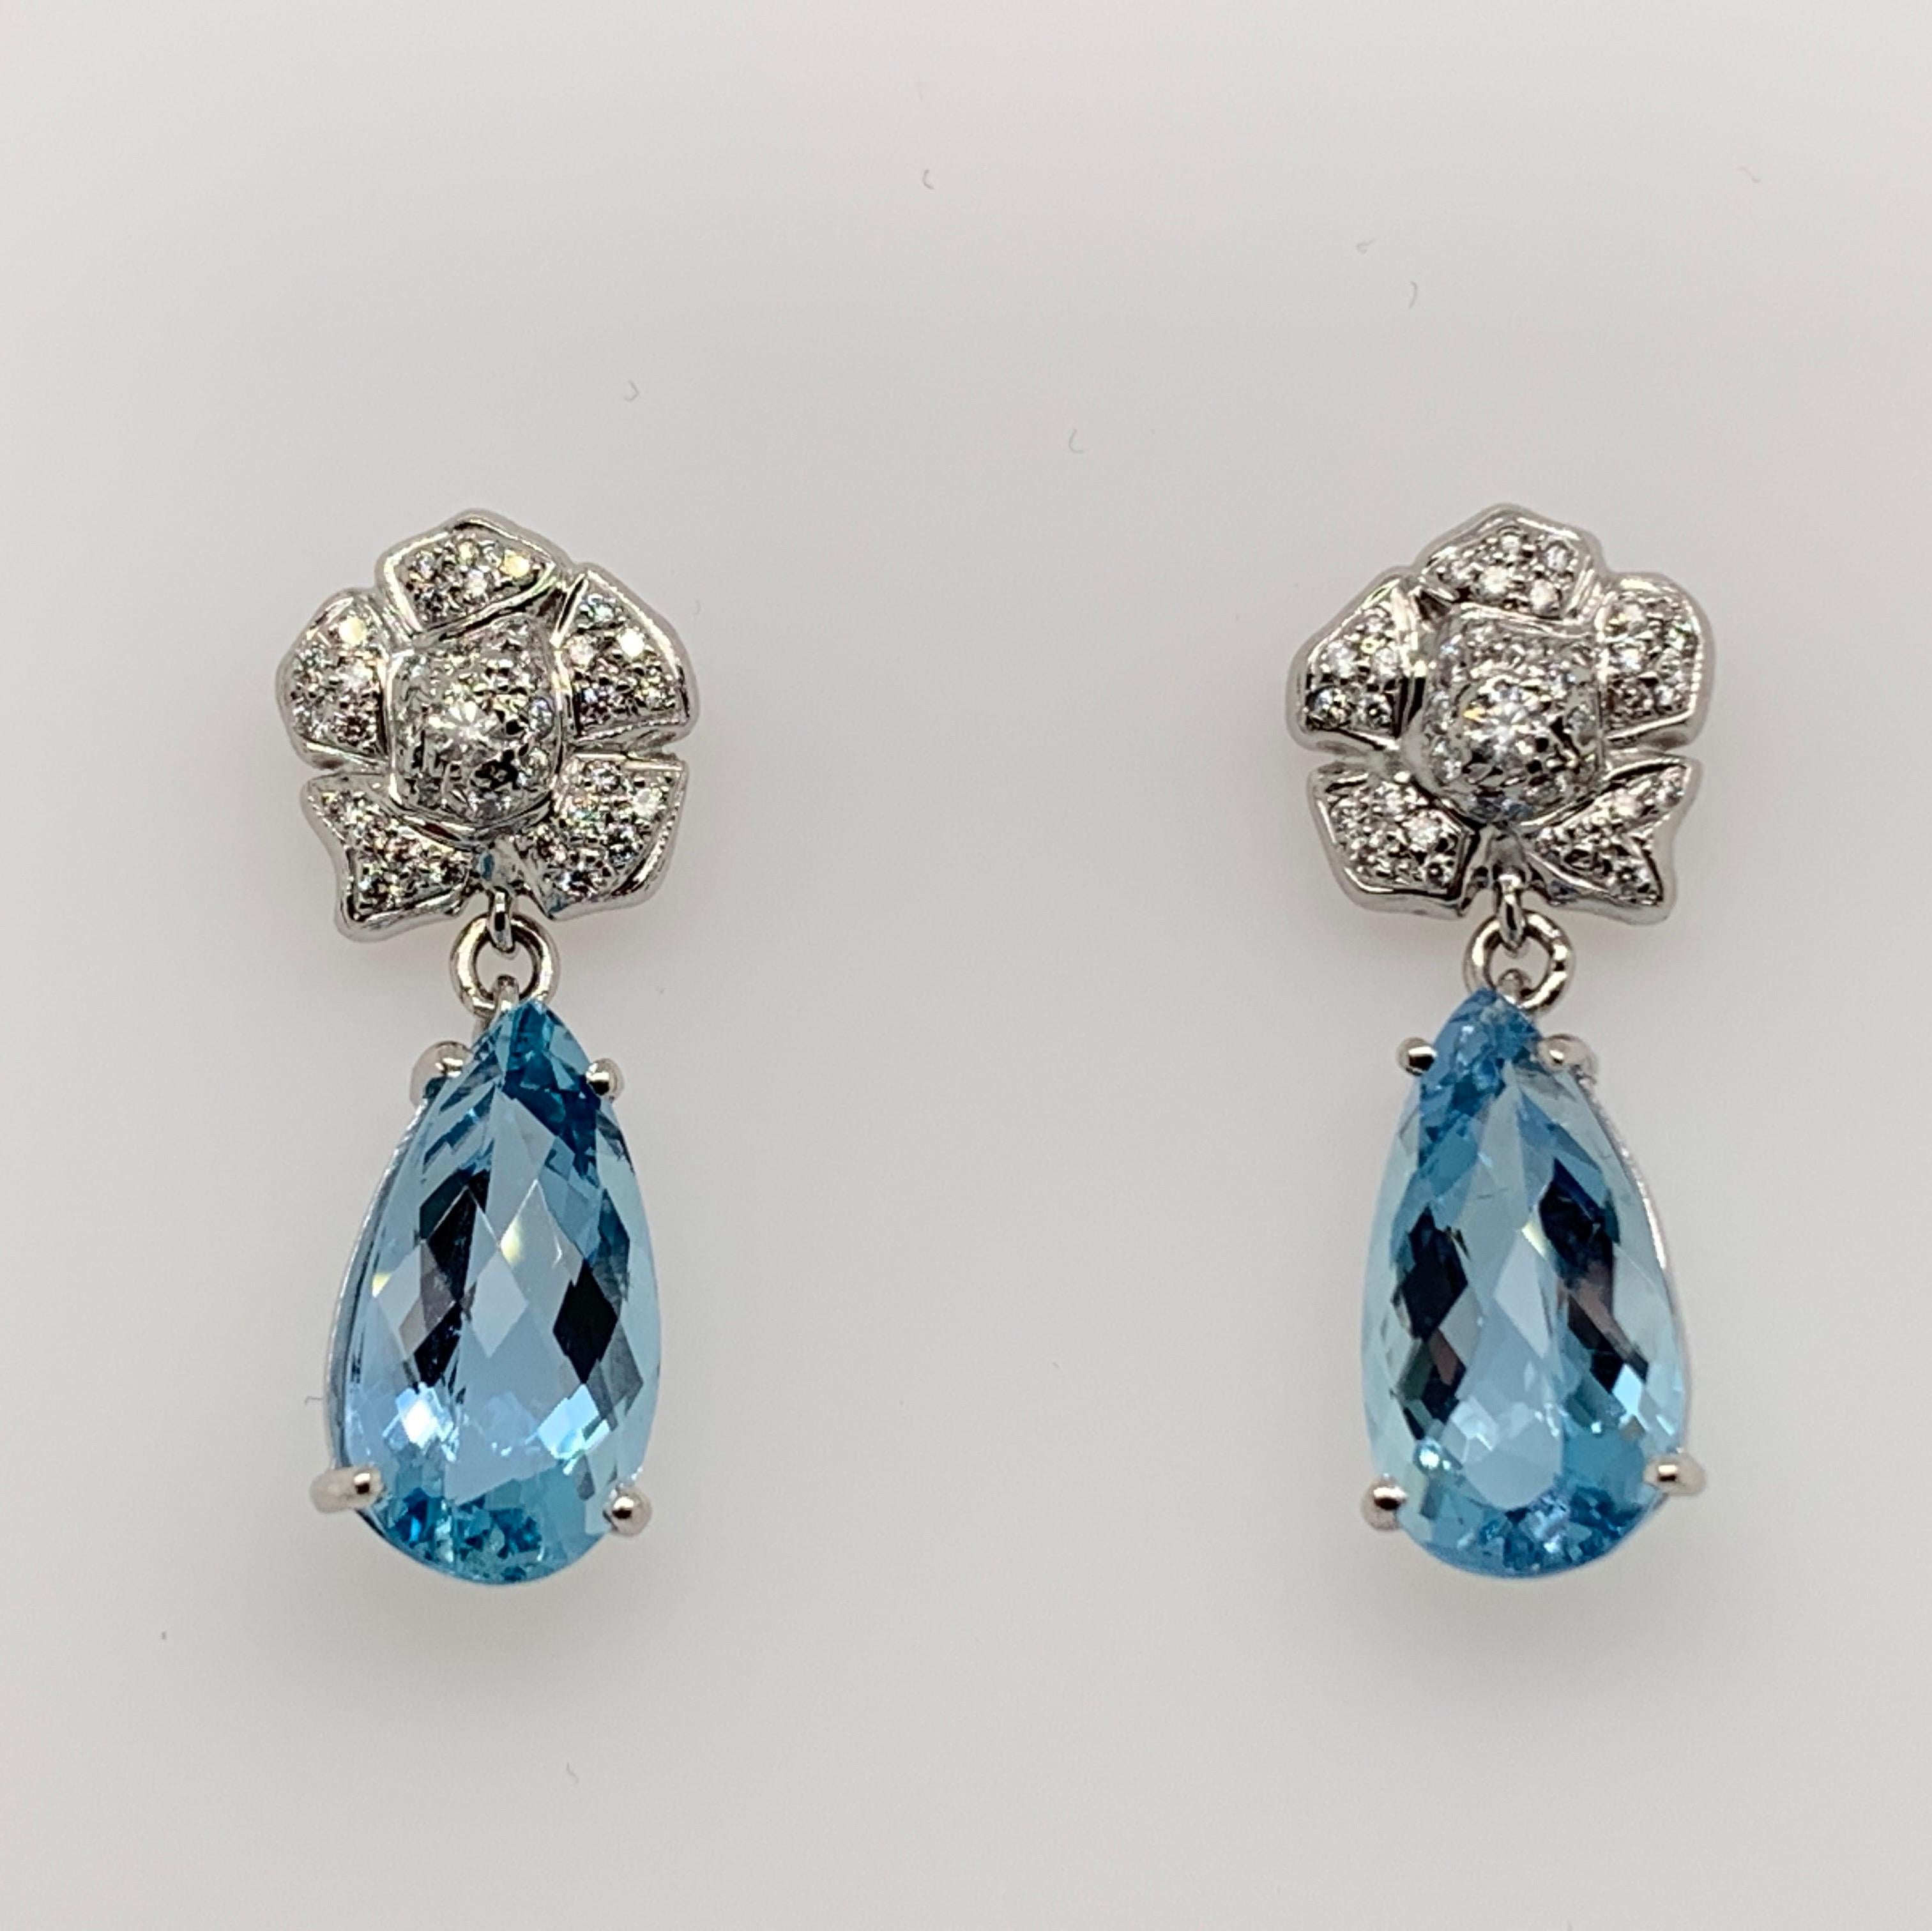 Modern Gold Earrings 7 Carat Natural Round Diamond and Pear Shape Aquamarine